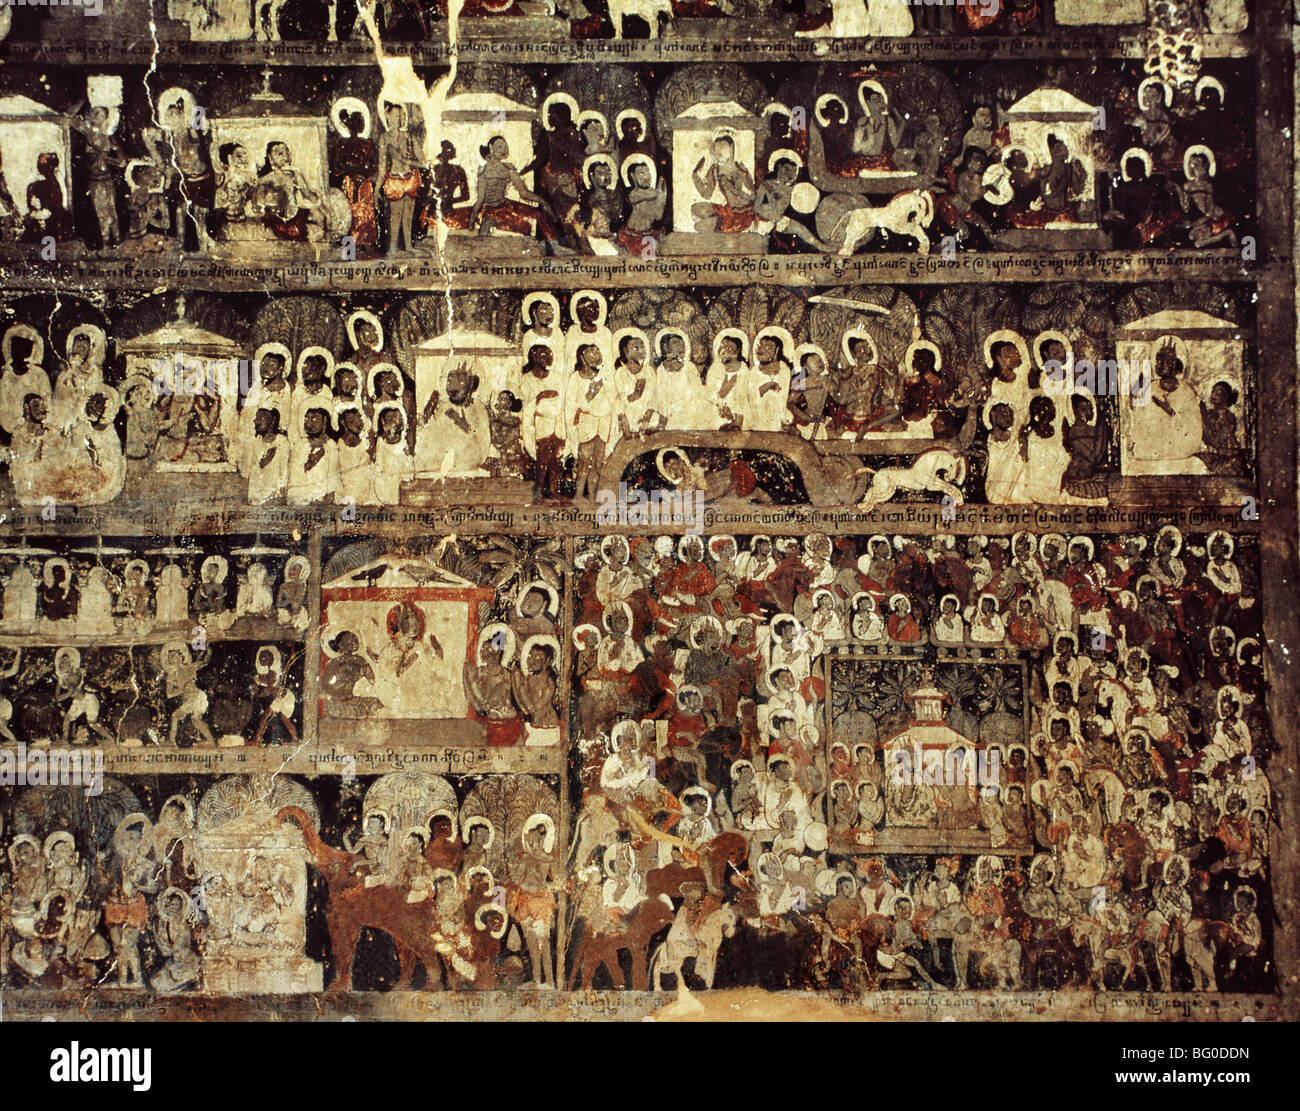 Sequentielle Szenen aus zehn letzten Jataka Geschichten, Halle des Lokahteikpan-Tempels, Bagan (Pagan), Myanmar (Burma) Stockfoto